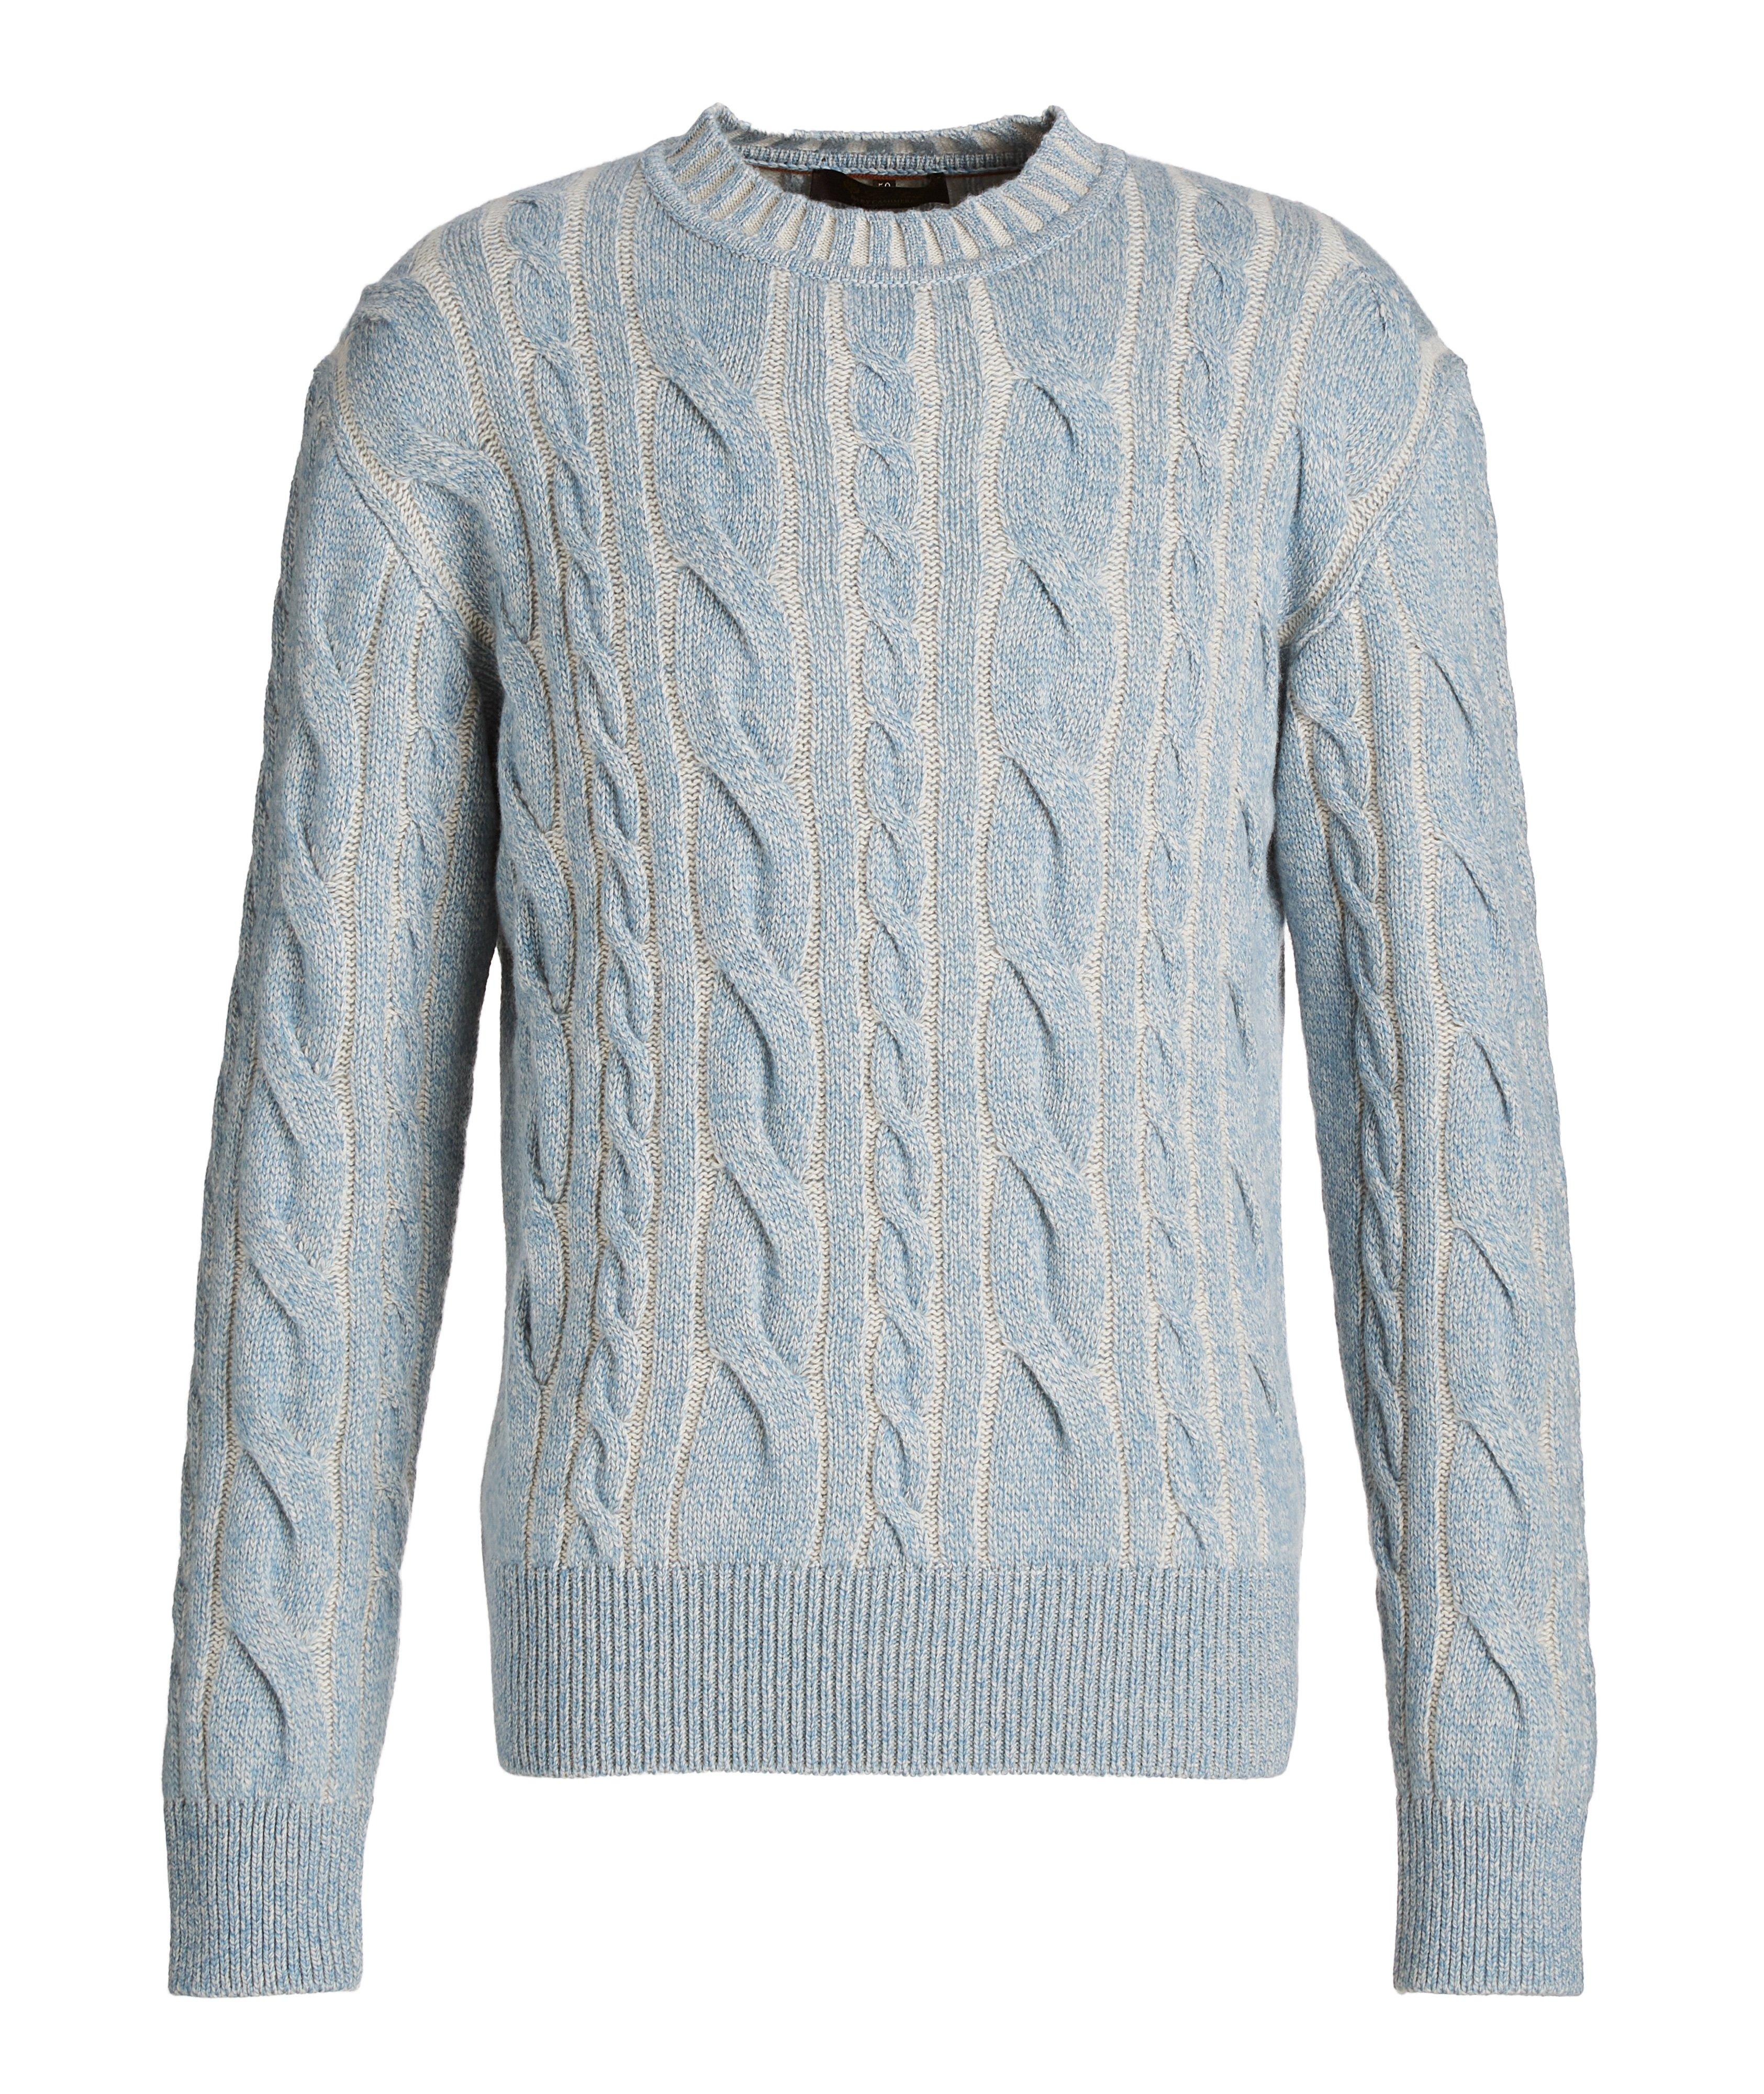 Mélange Cashmere Cable Knit Sweater image 0